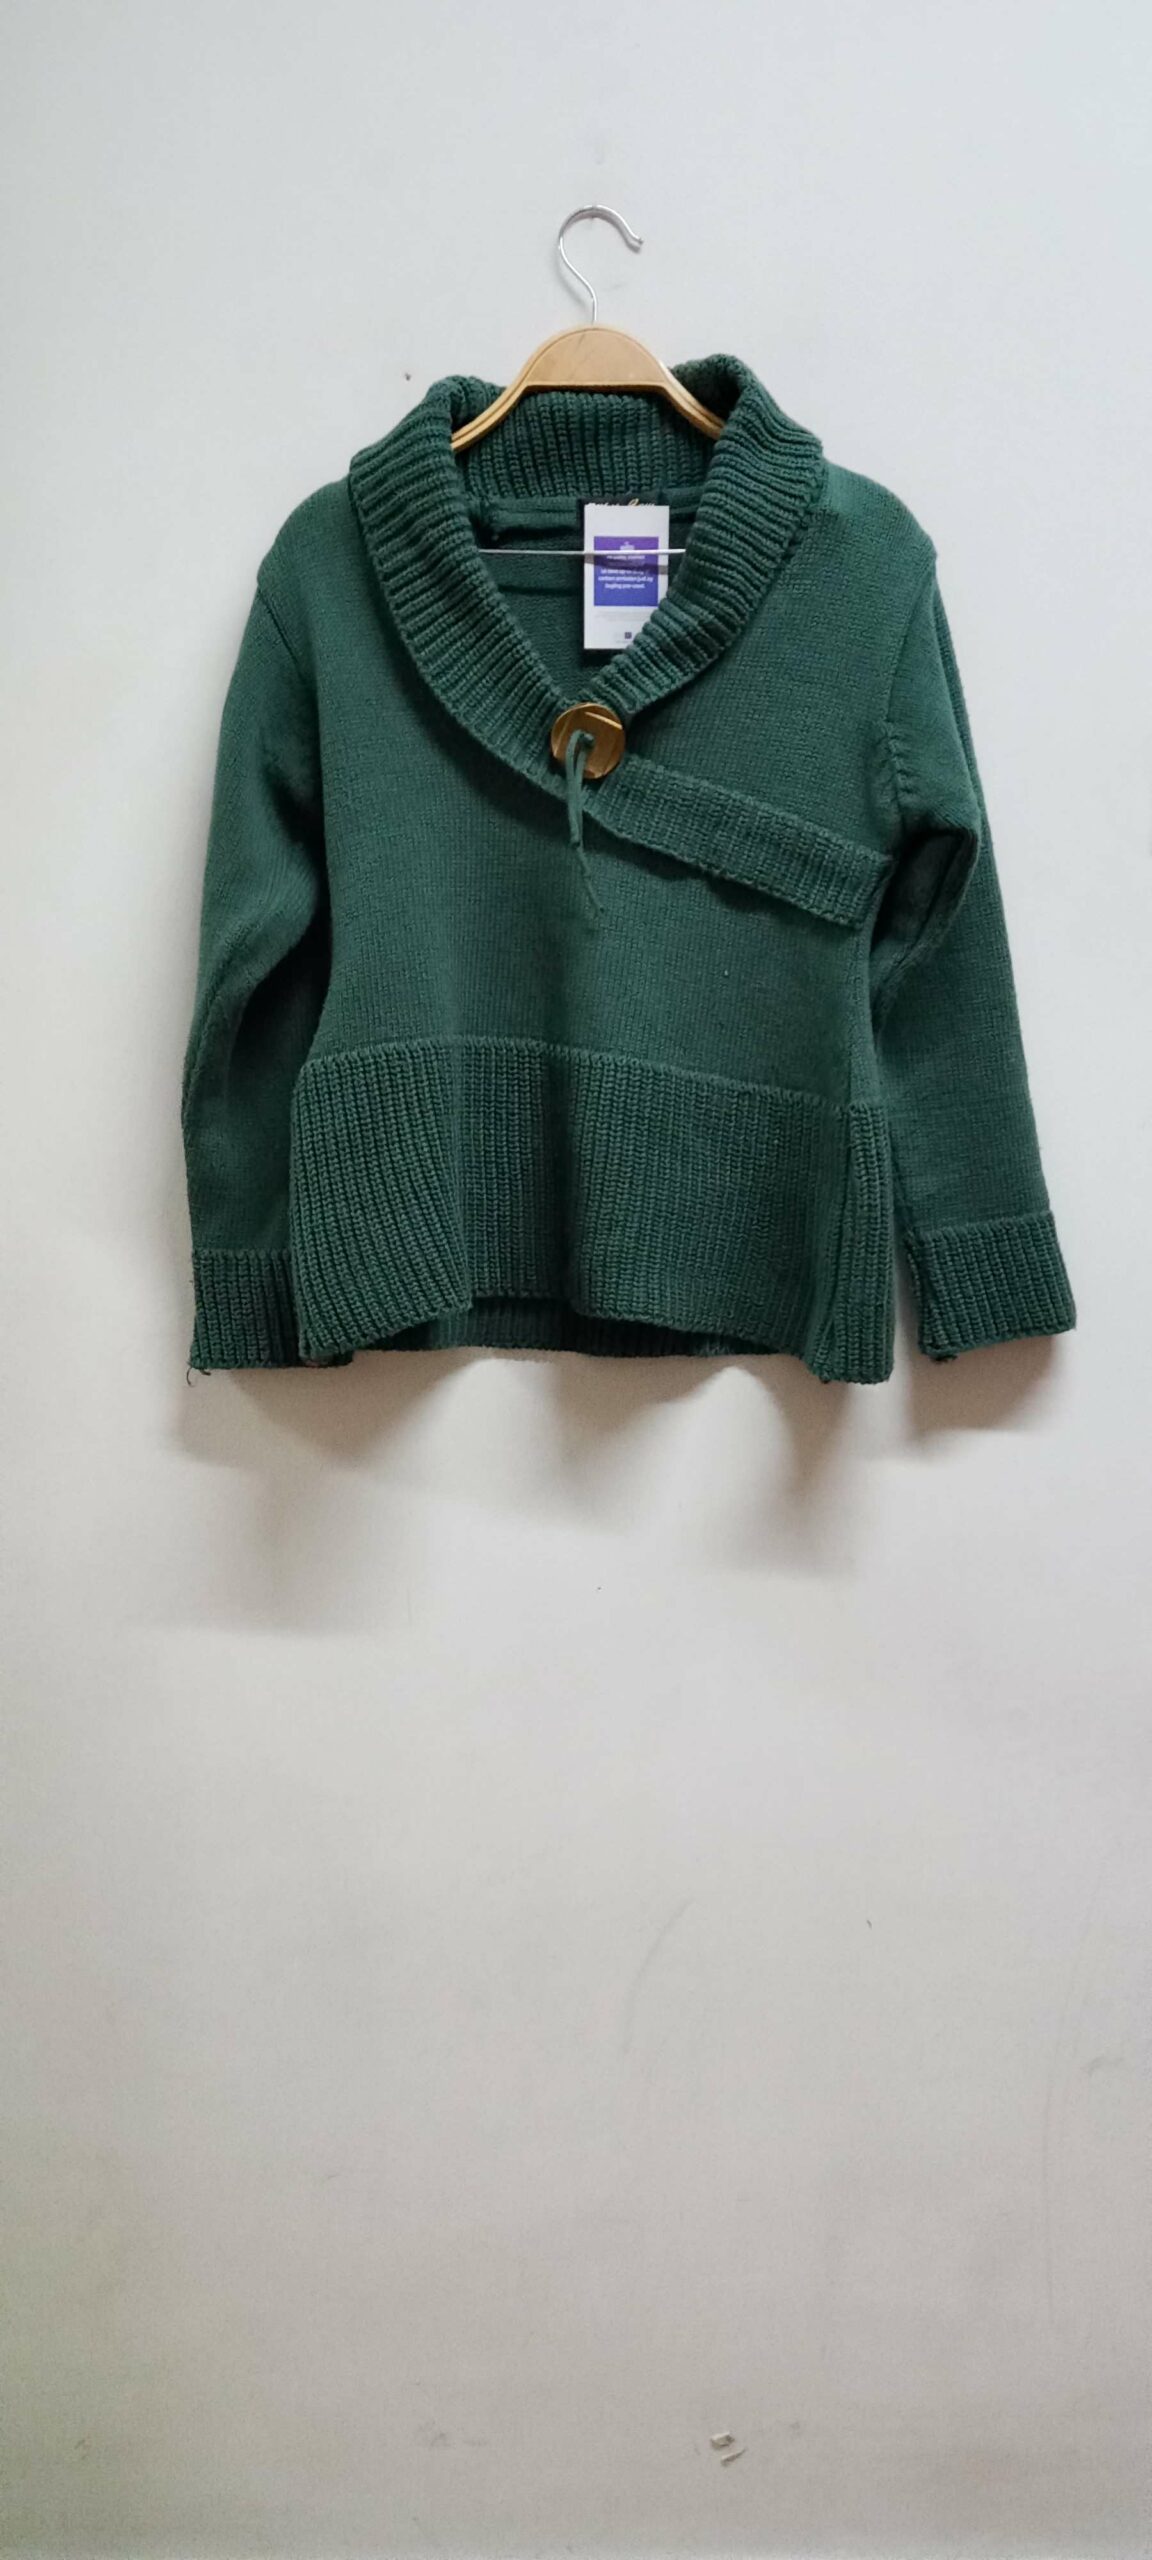 Fern Green Knitted Sweater